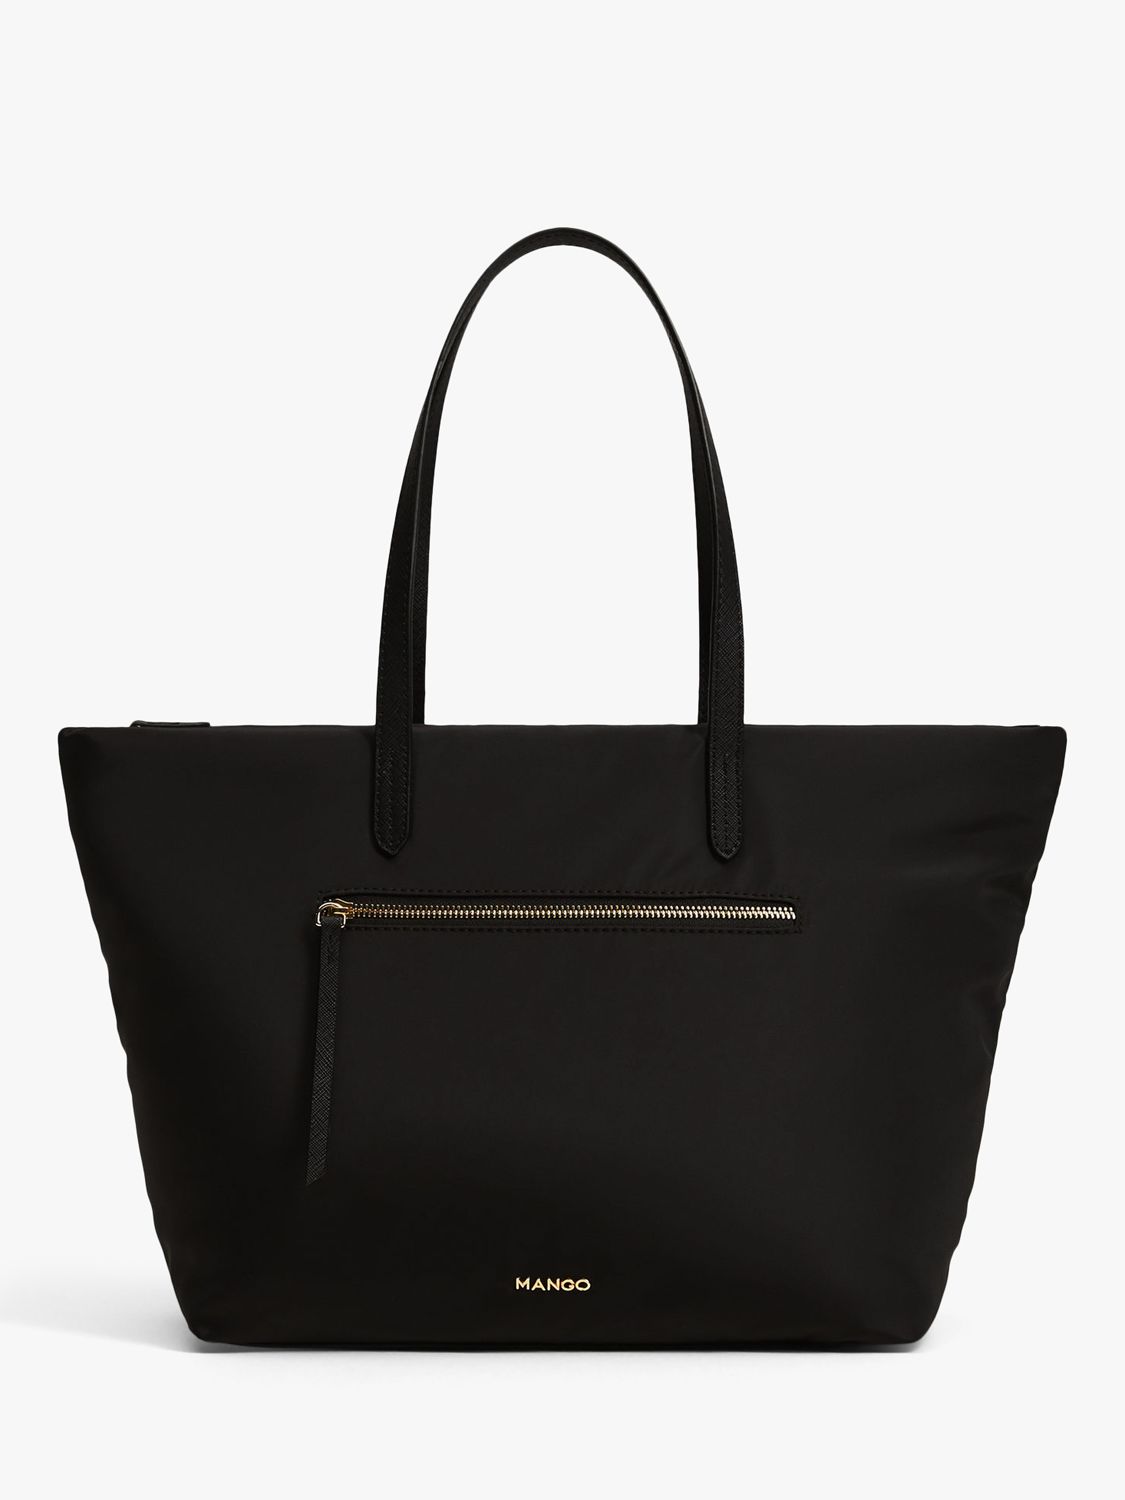 Mango Pockets Shopper Bag, Black at John Lewis & Partners